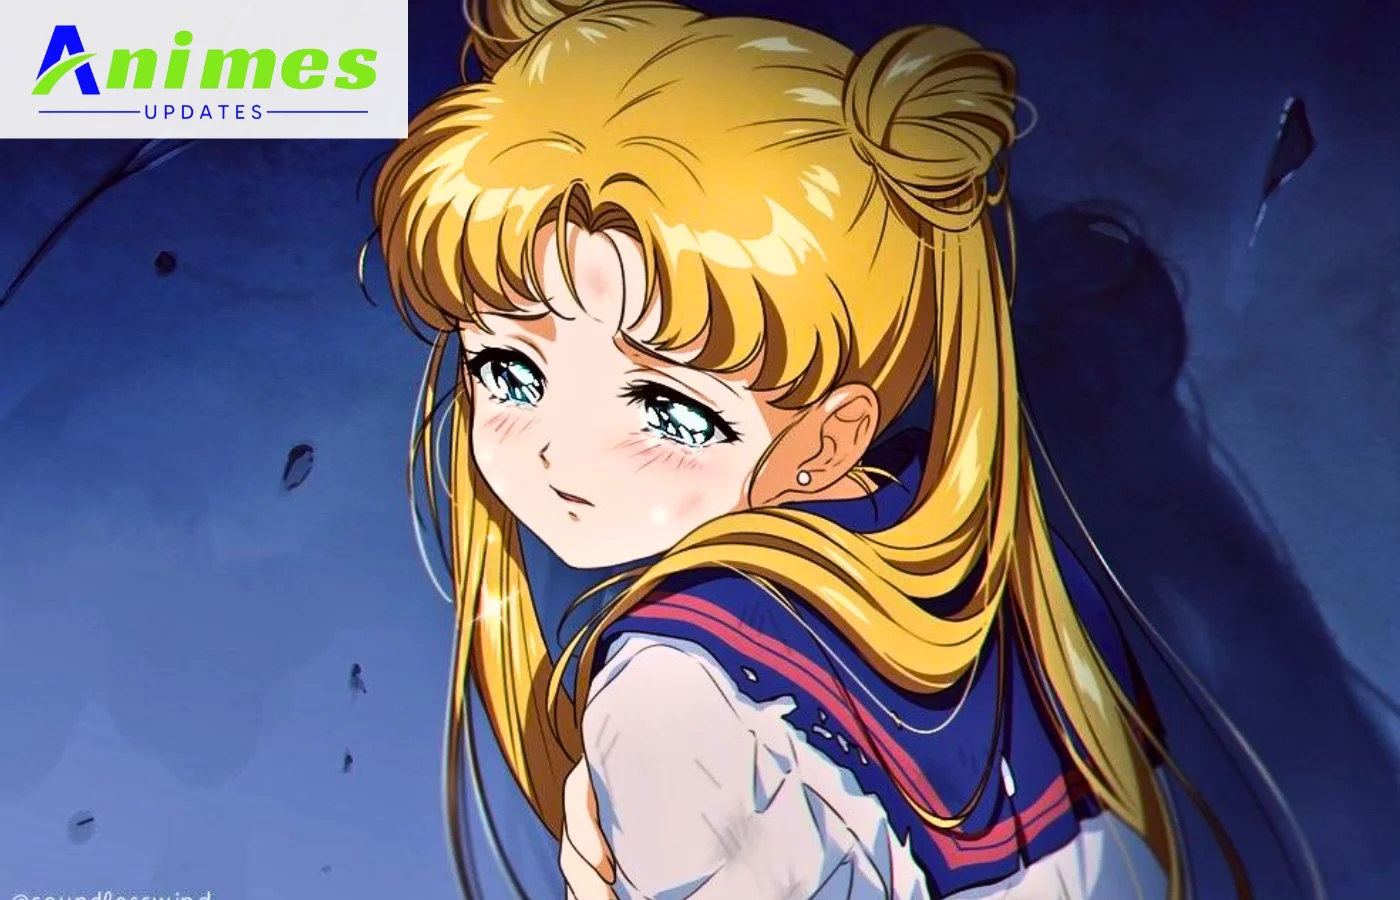 Usagi (Sailor Moon)